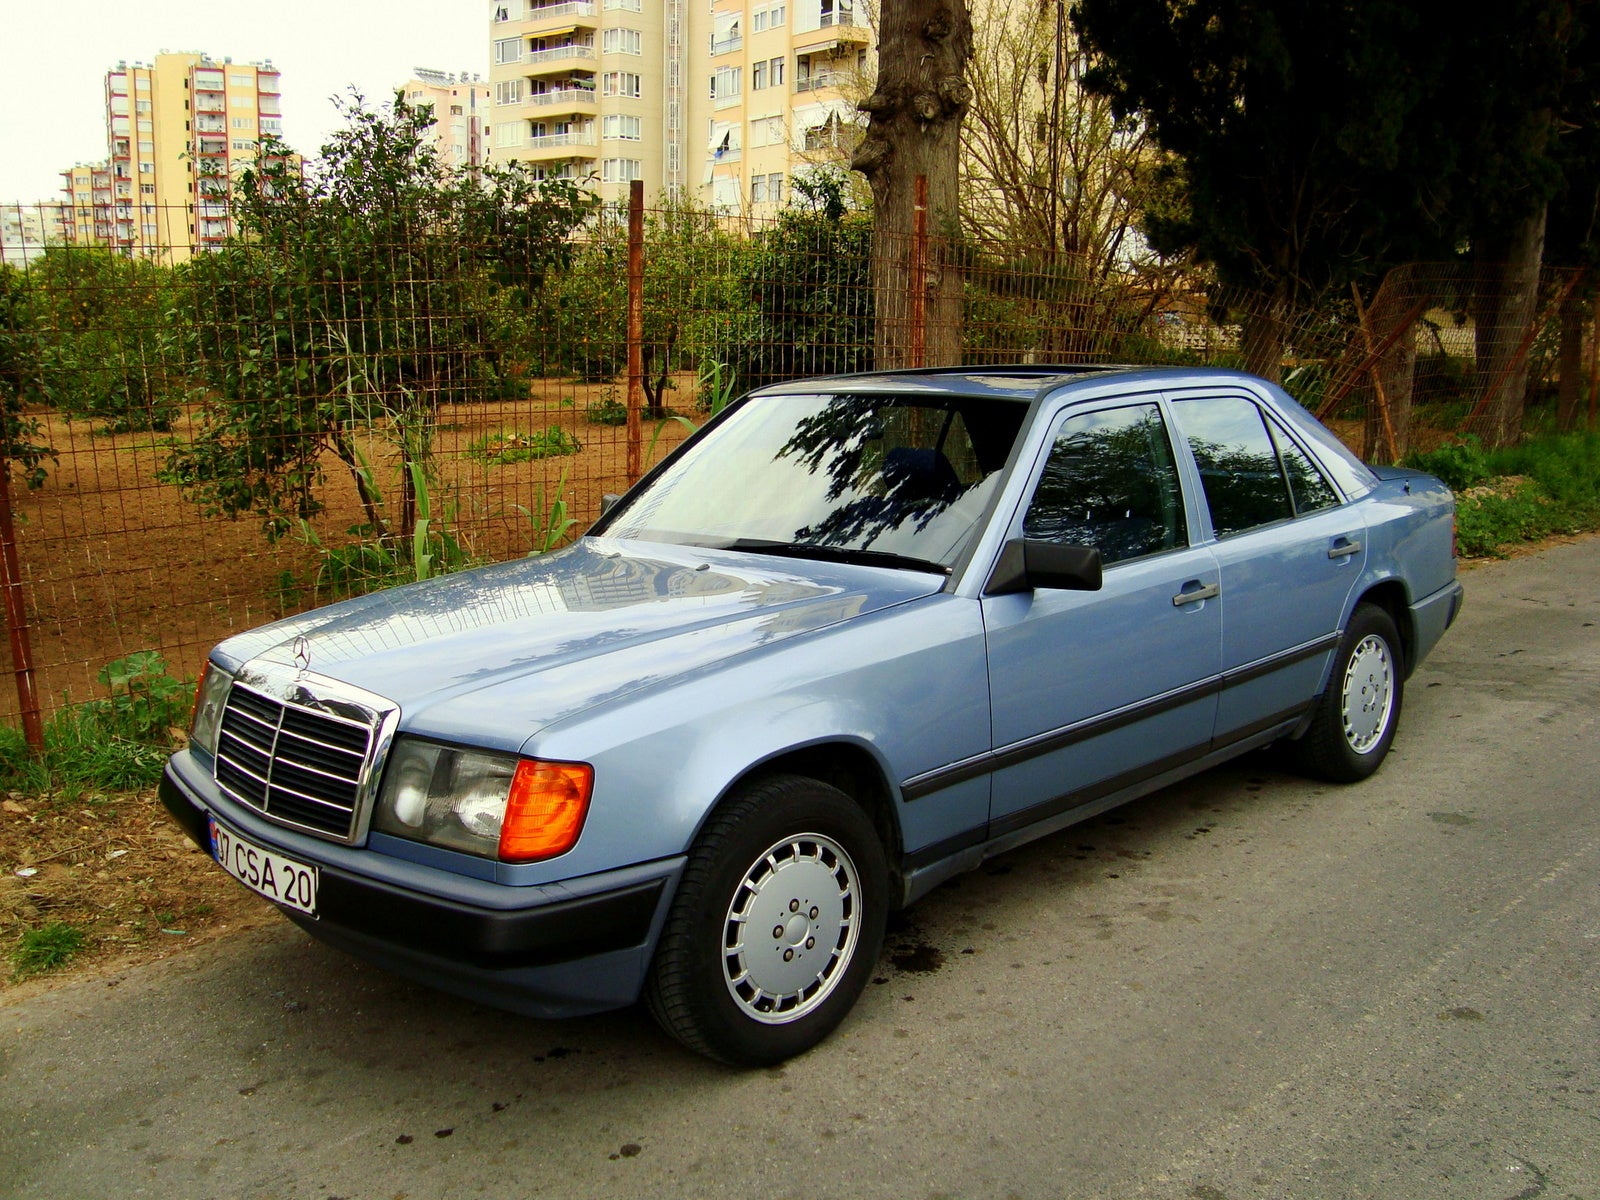 1994 Mercedes-Benz E-Class - Exterior Pictures - CarGurus